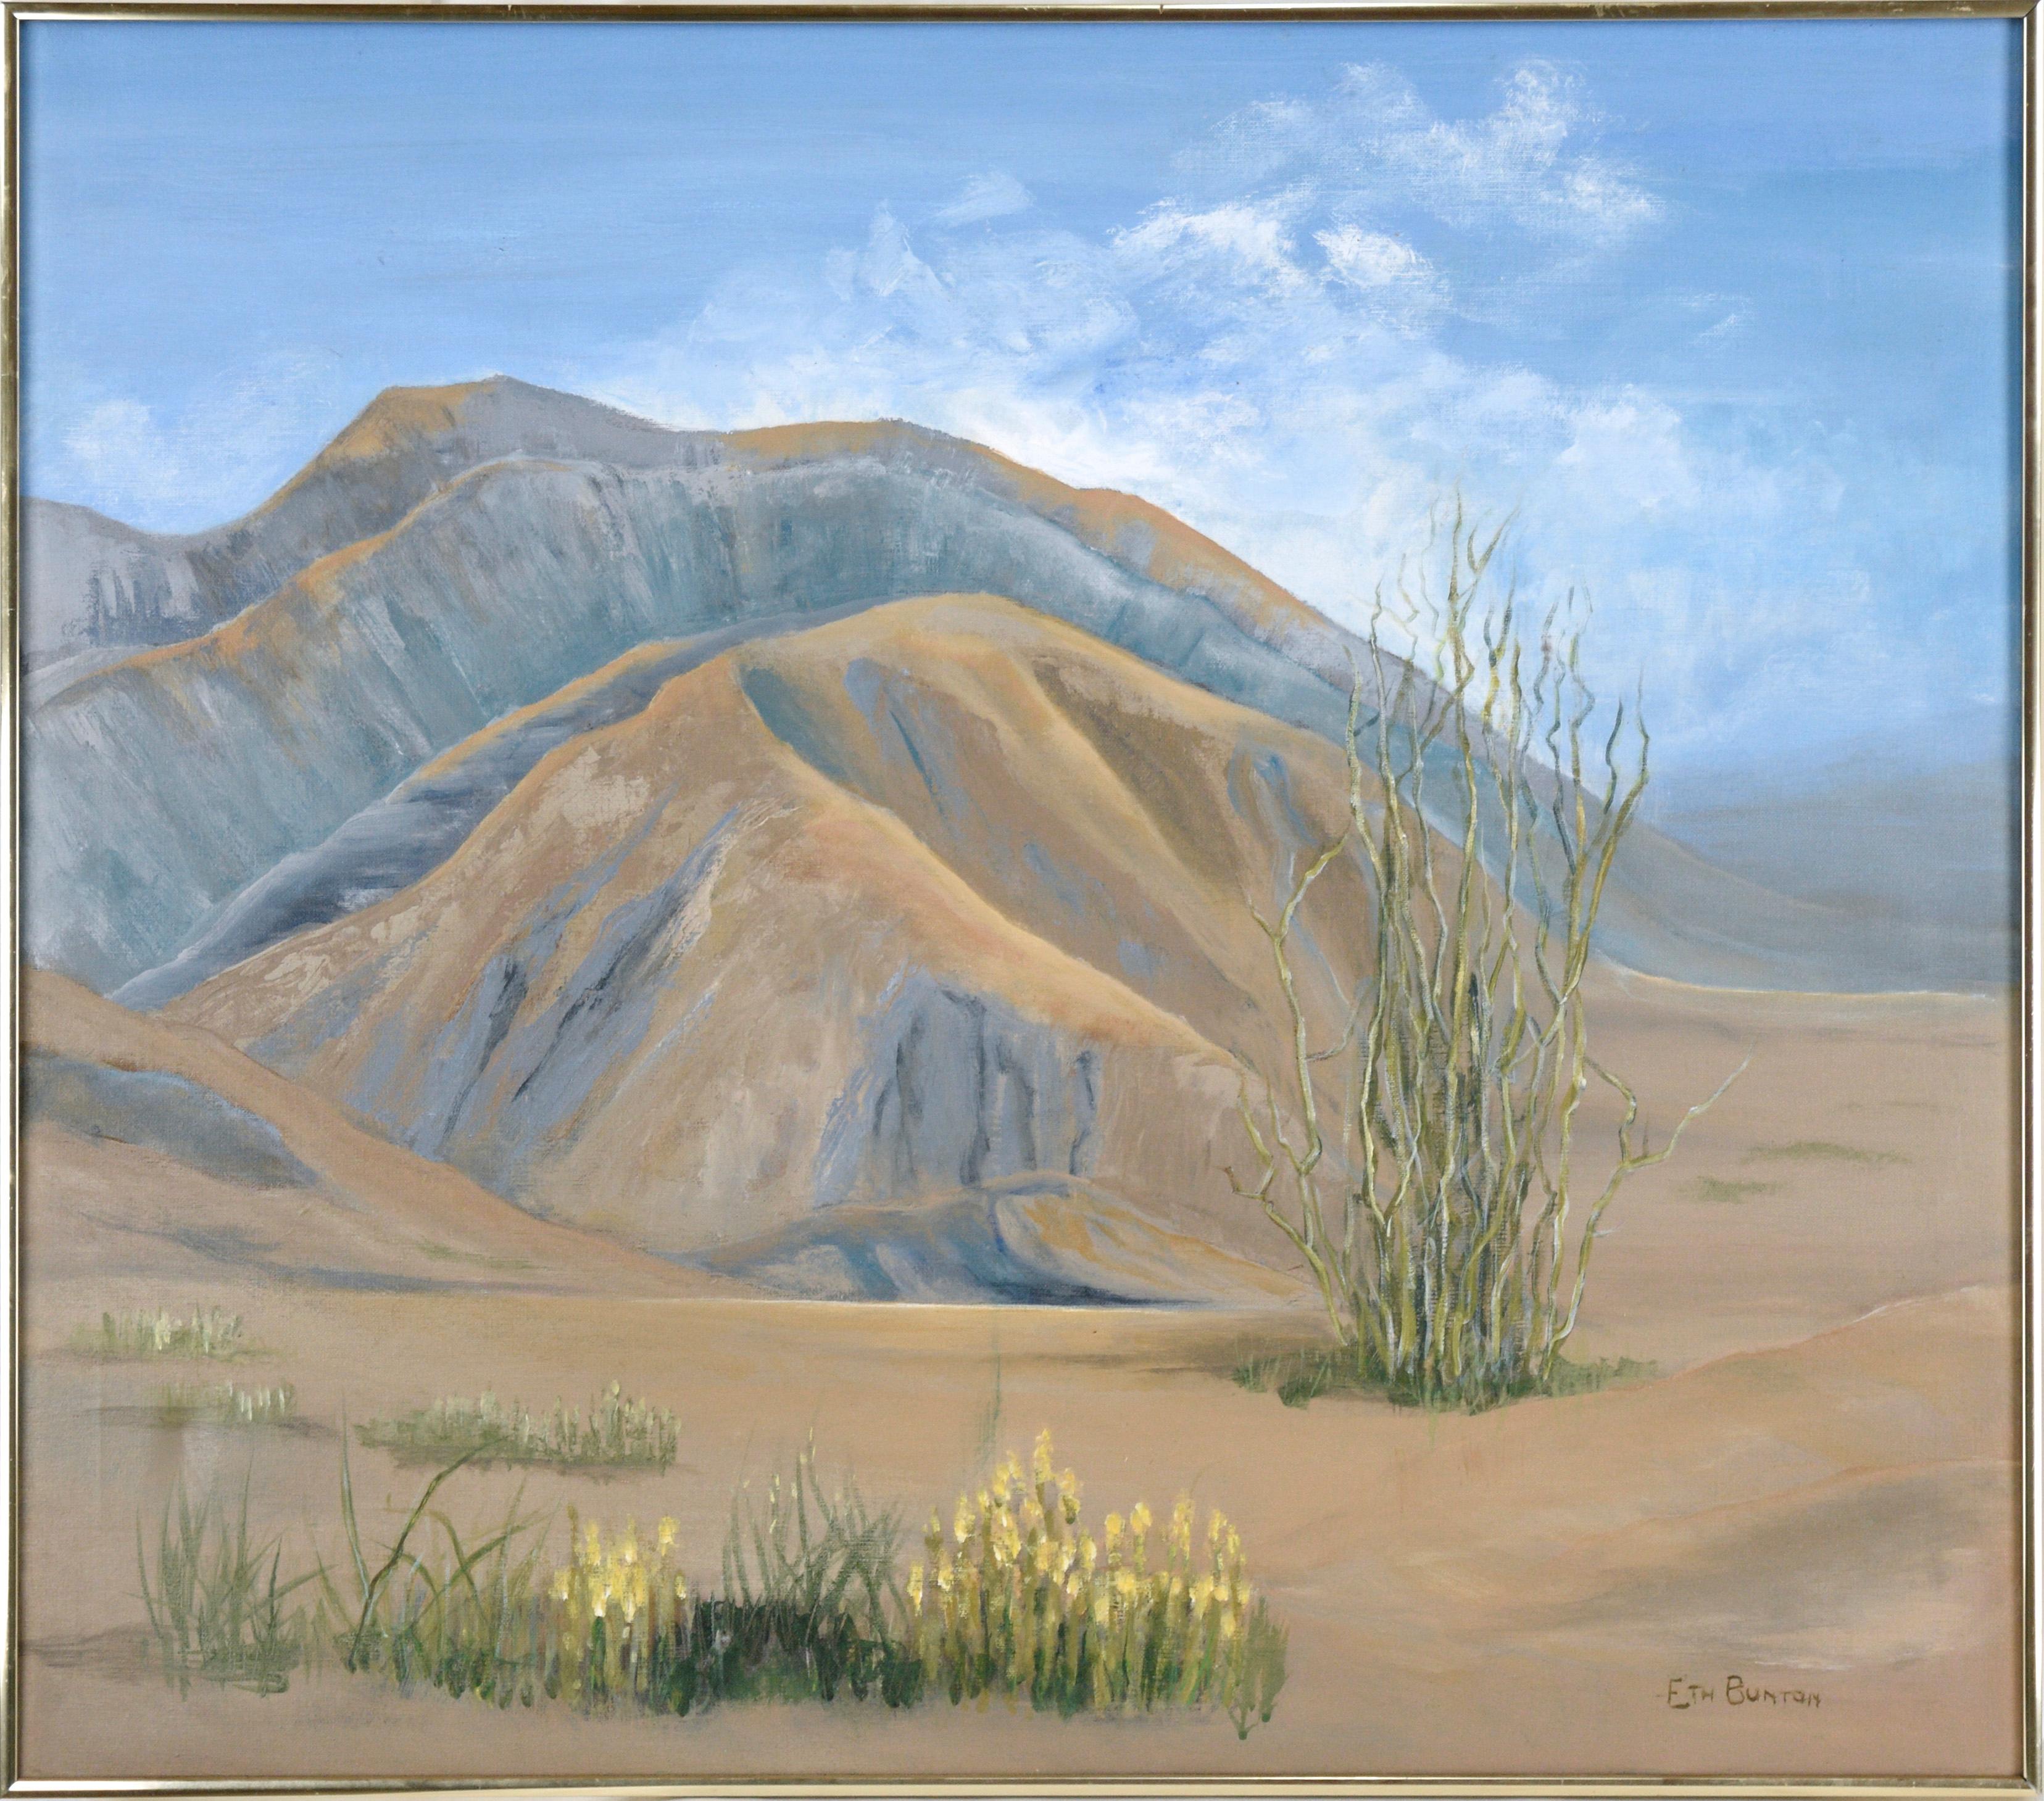 Eth Bunton Landscape Painting - Desert Foothills Under a Blue Sky - Landscape in Acrylic on Canvas